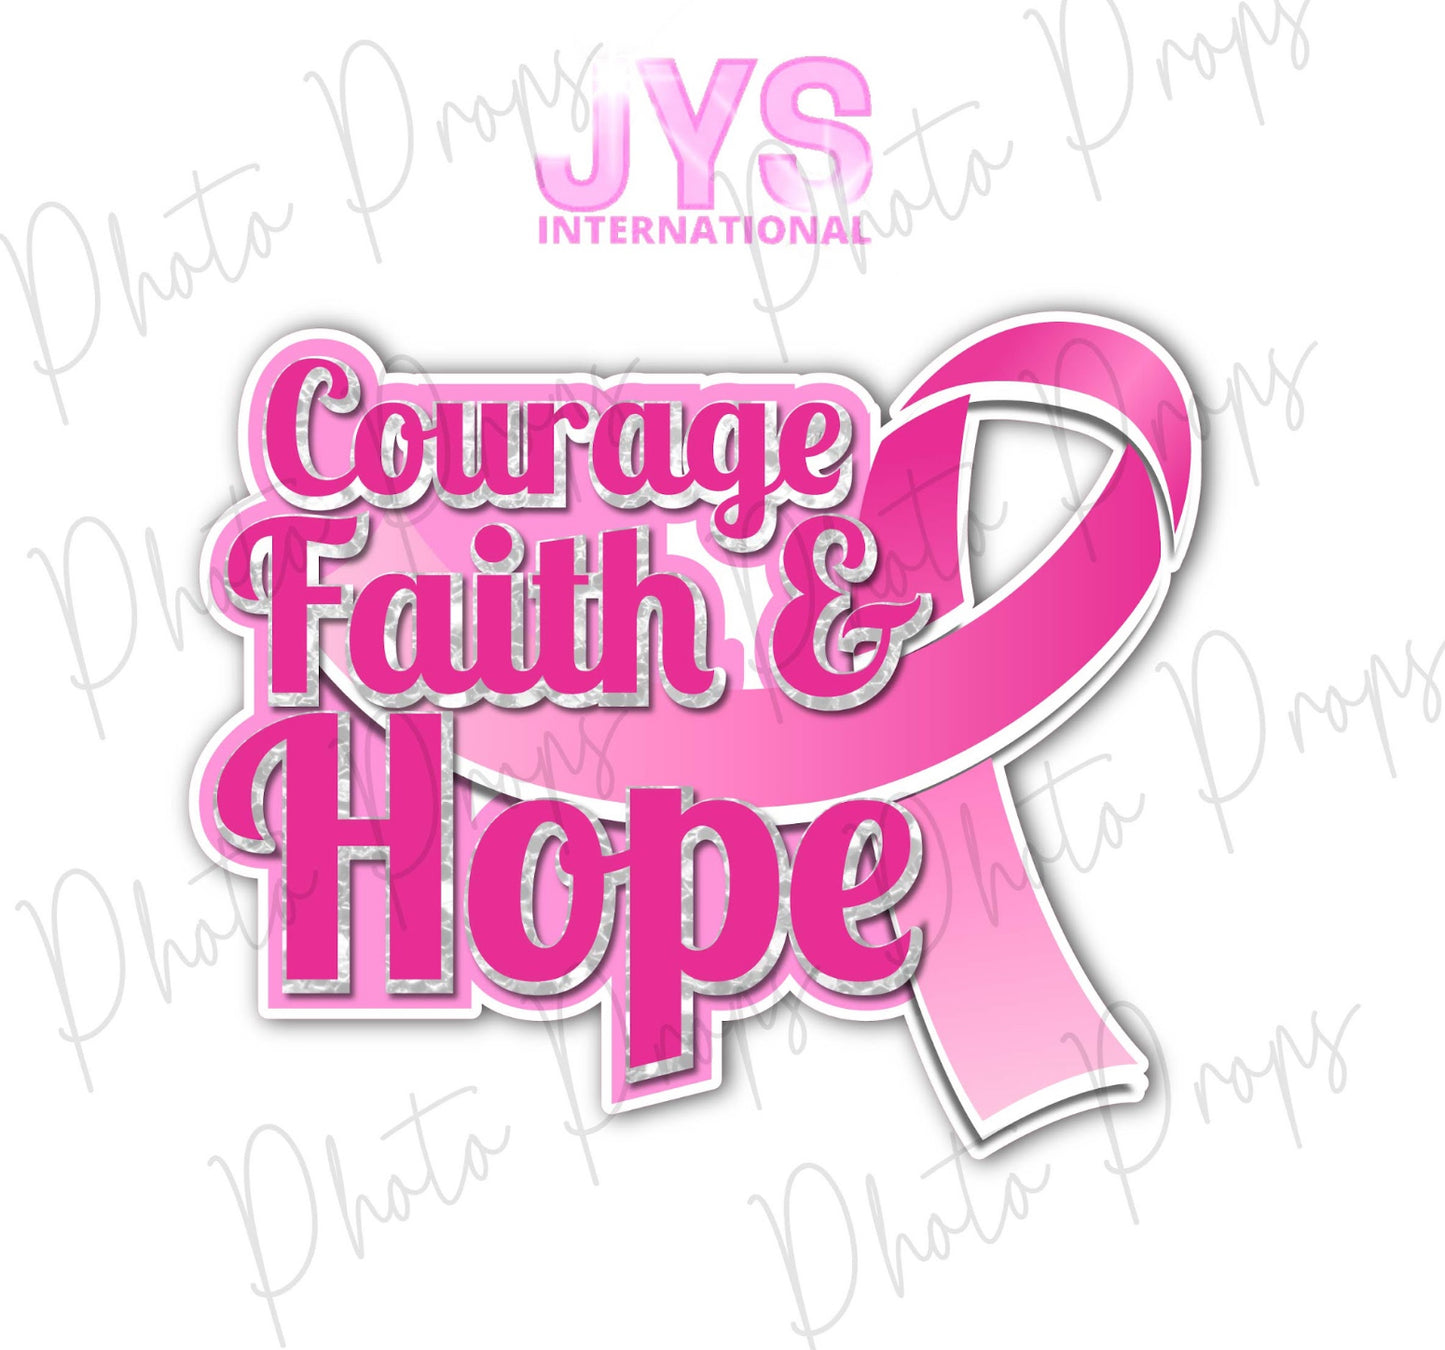 P1337: COURAGE FAITH AND HOPE